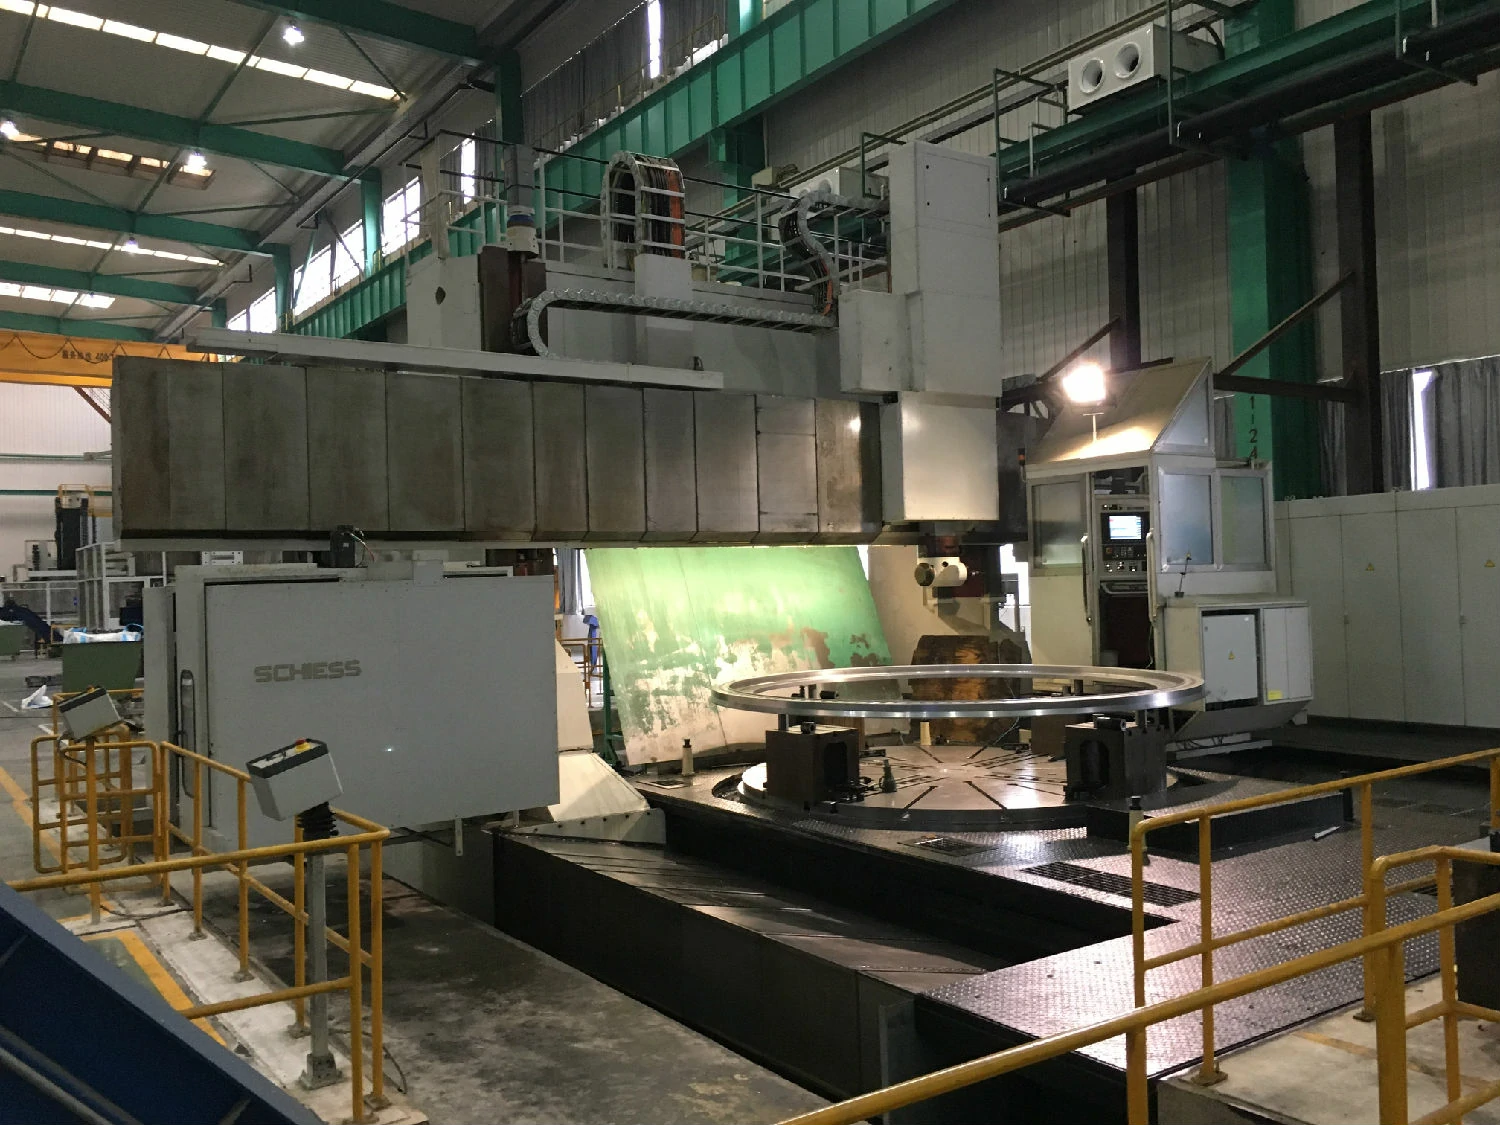 Turning-milling machining center